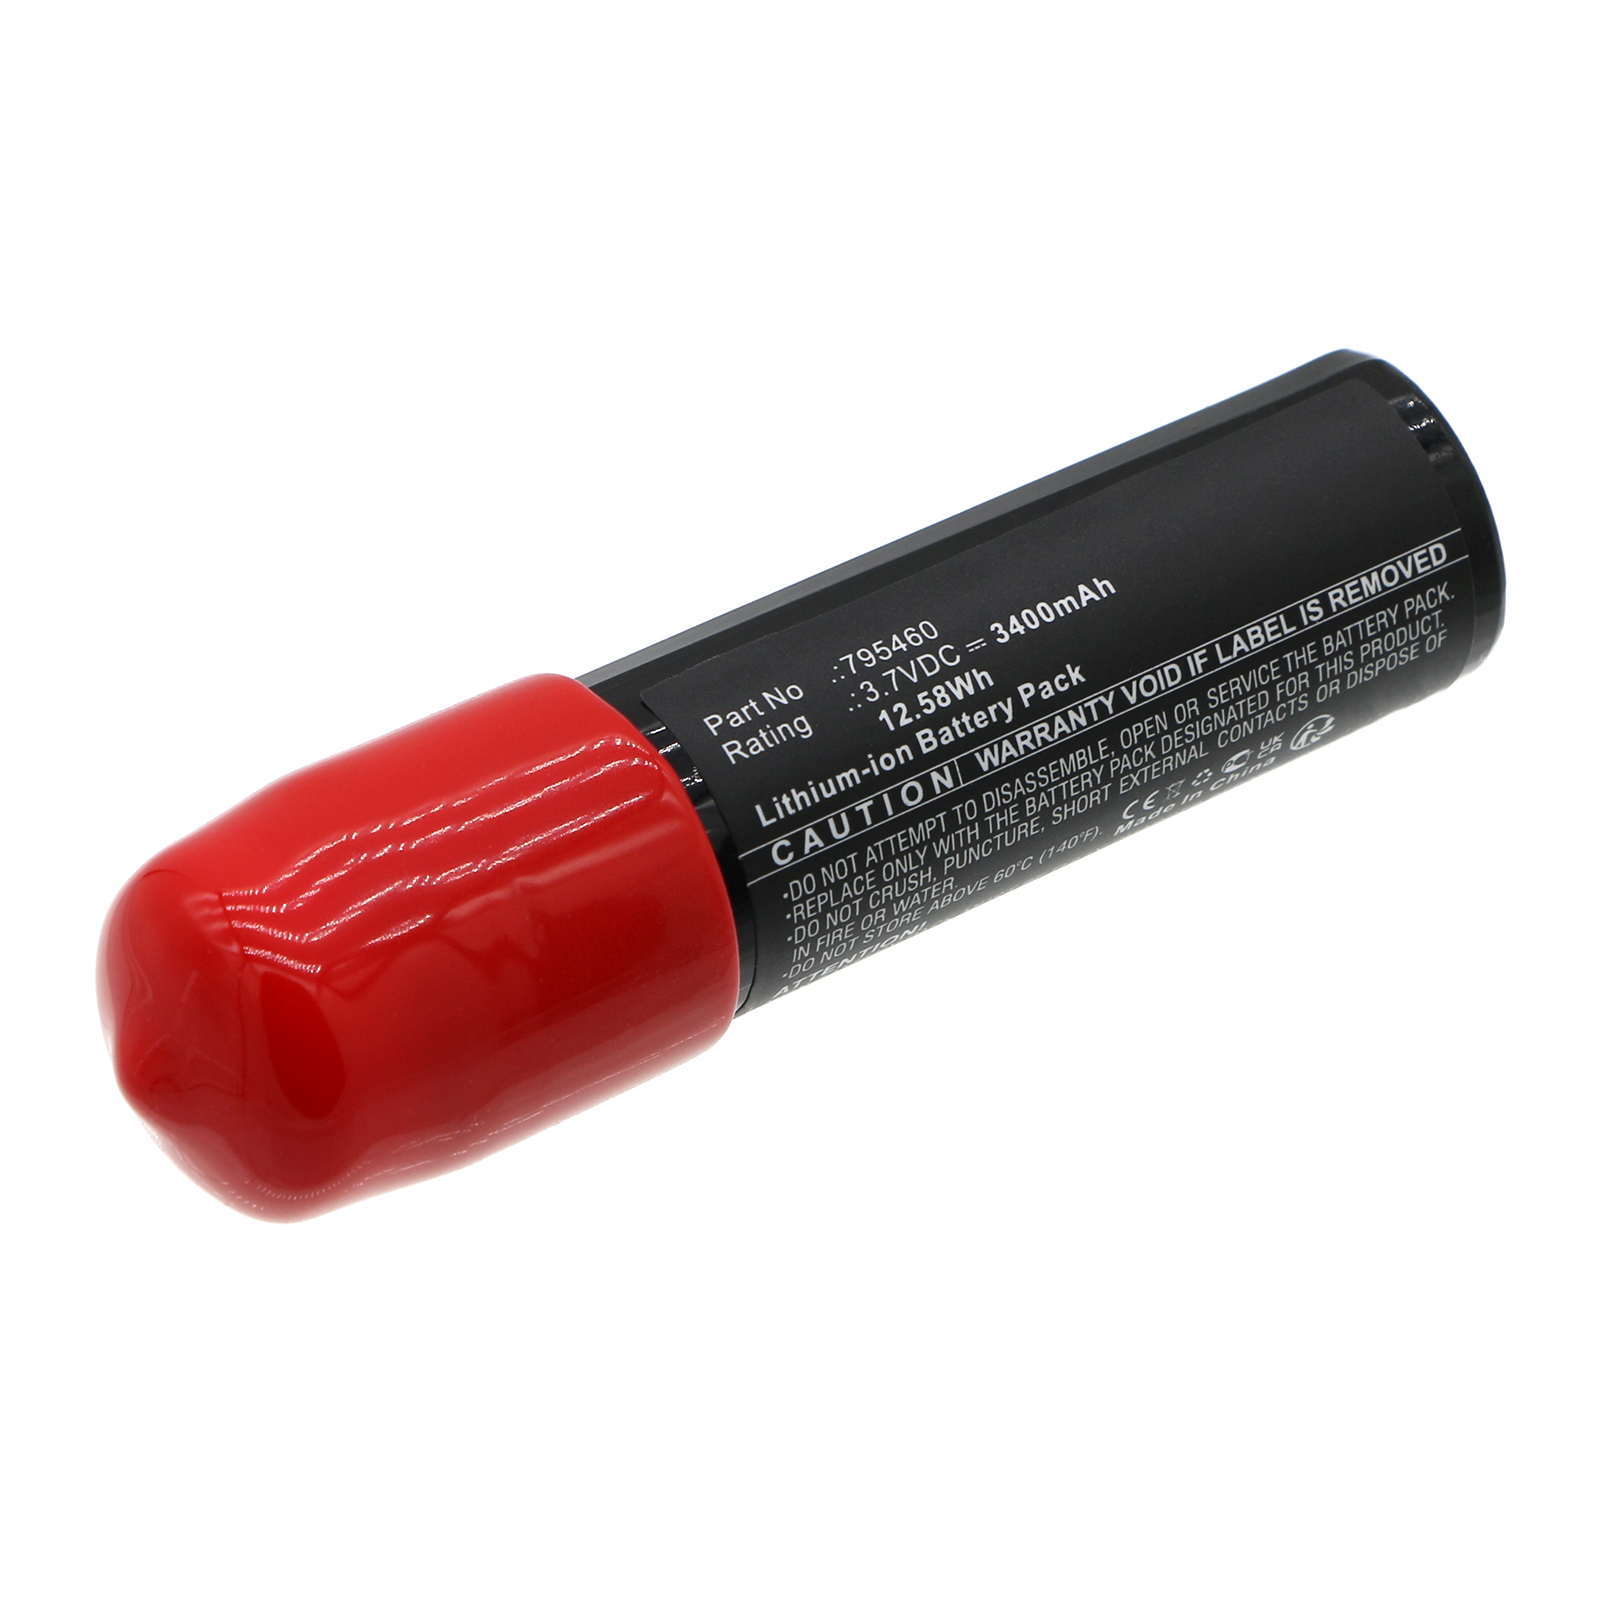 Batteries for LeicaEquipment